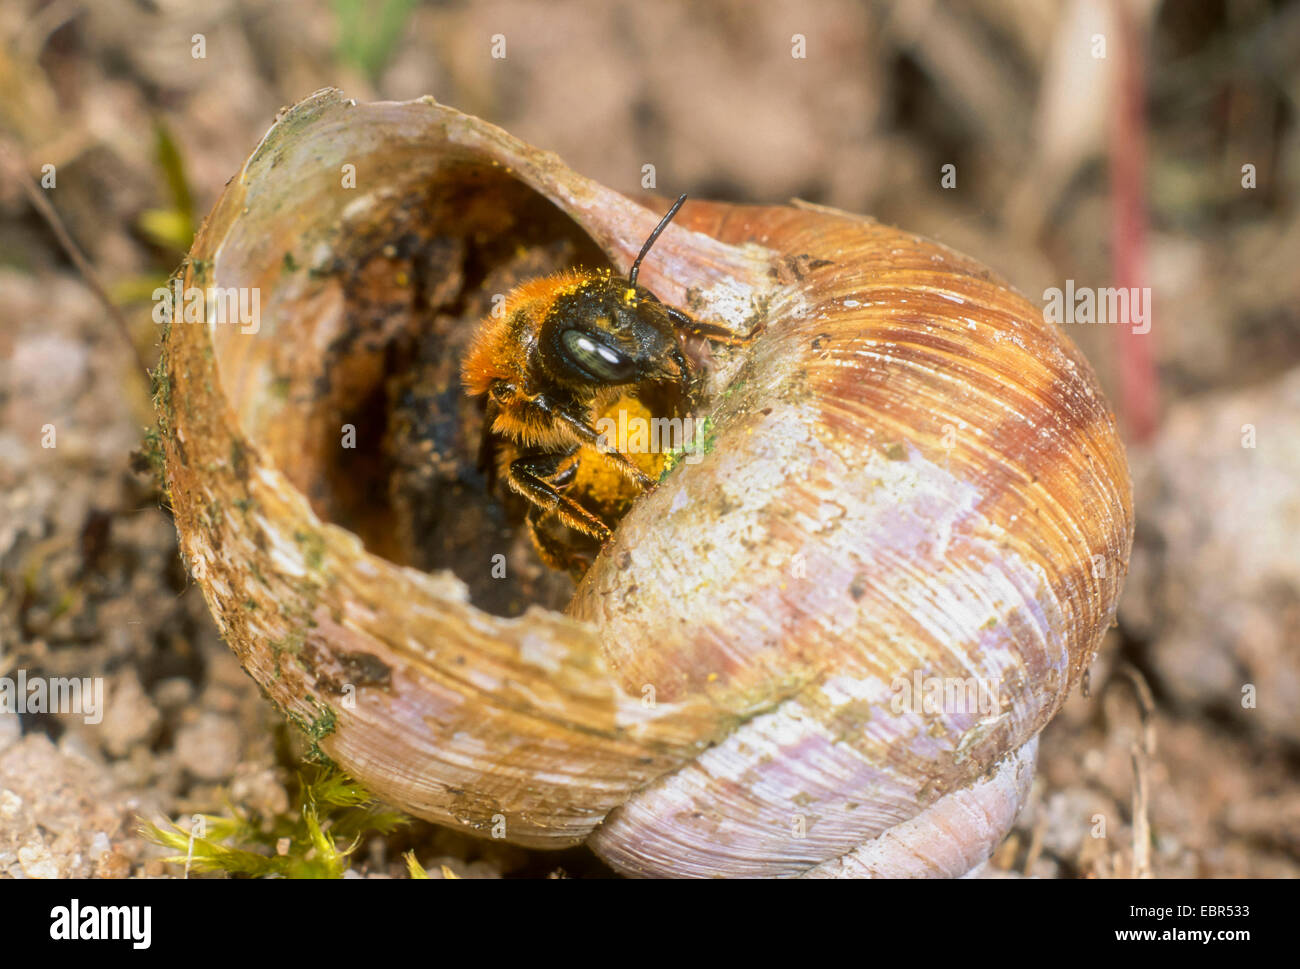 Gold-fringed Mason-bee (Osmia aurulenta), female at the nest in a snail shell, Germany Stock Photo